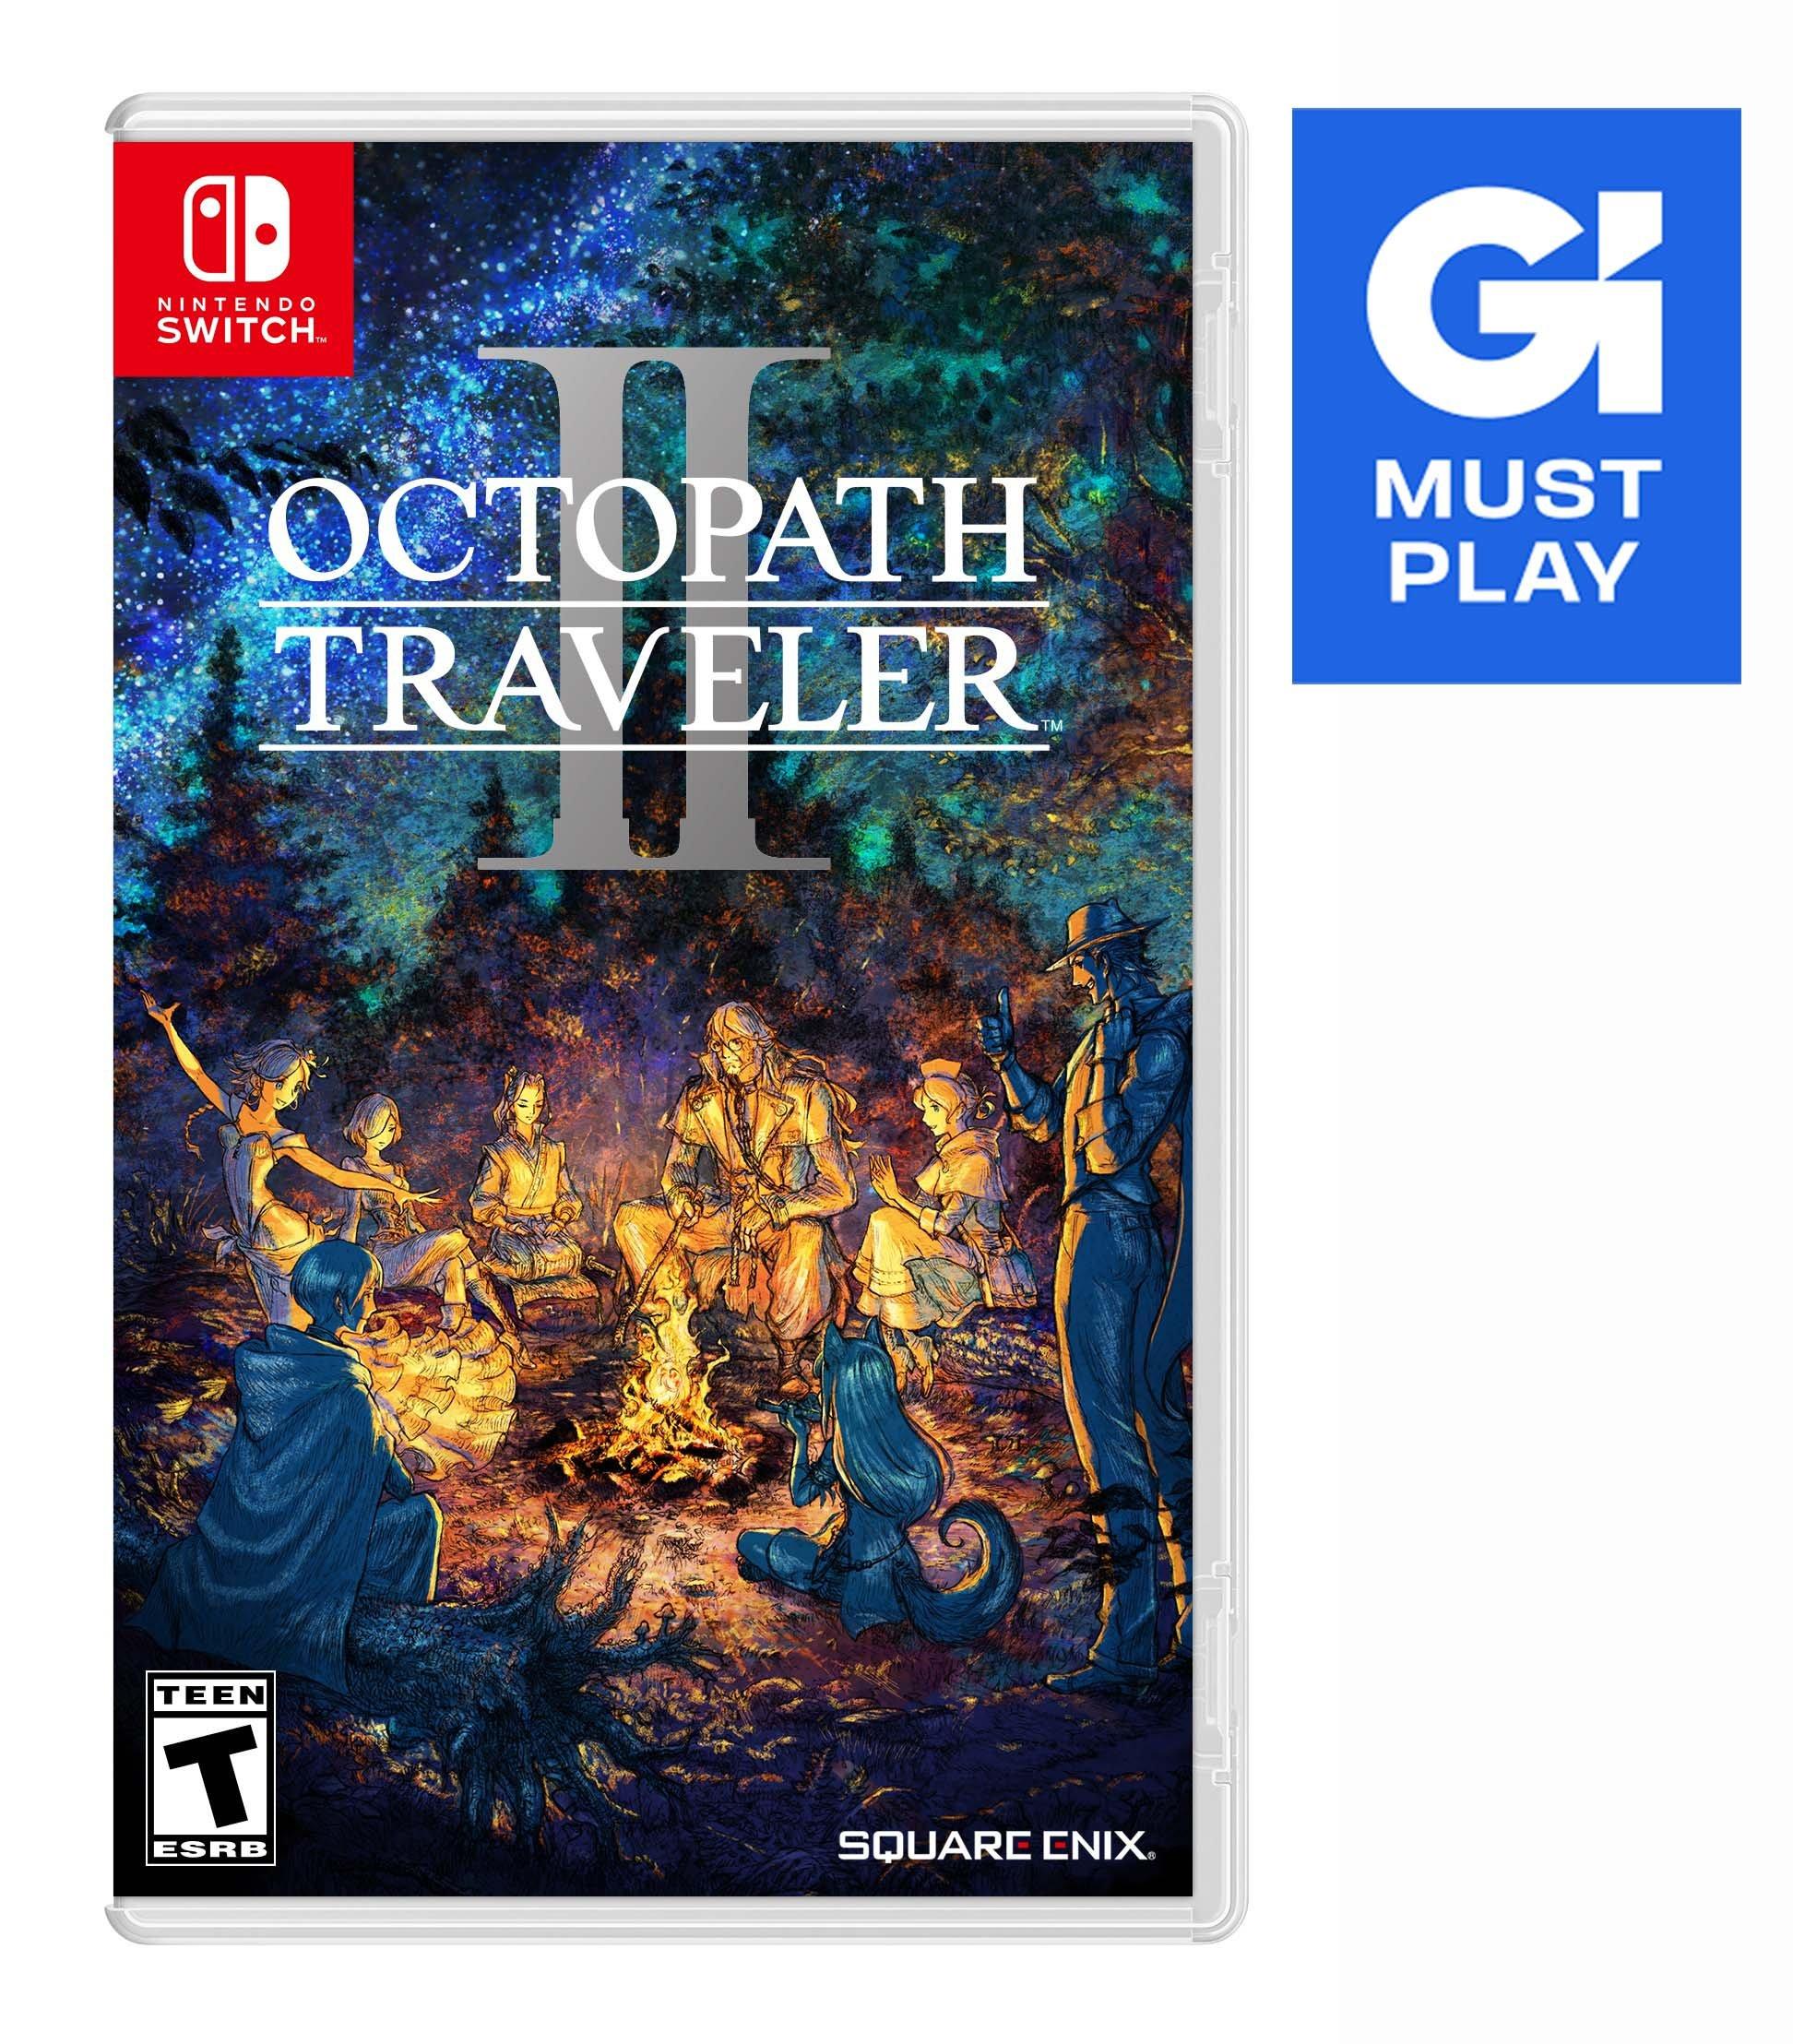 Nintendo Switch Octopath Traveler Video Game - EU Version Region Free 